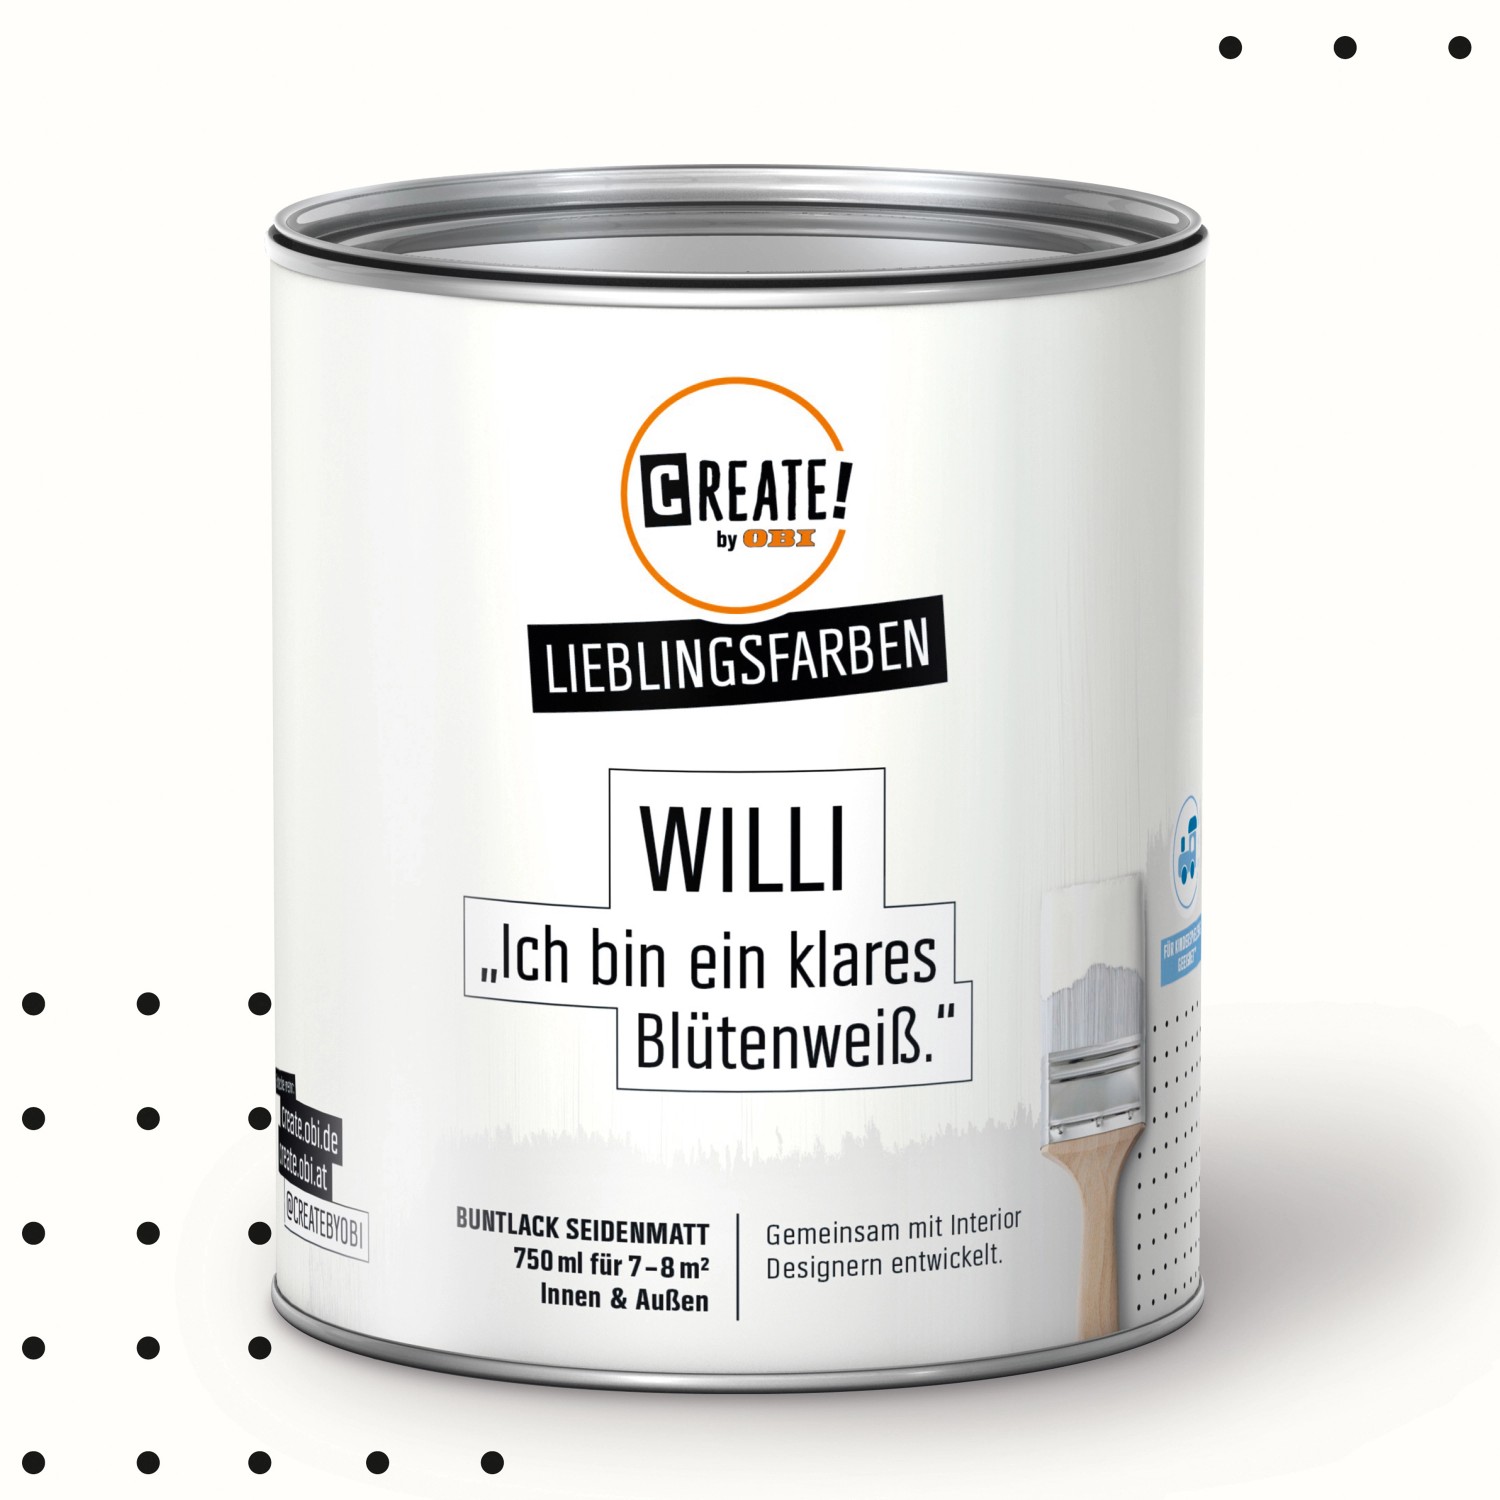 CREATE! by OBI Lieblingsfarben Buntlack Willi Blütenweiß seidenmatt 750ml